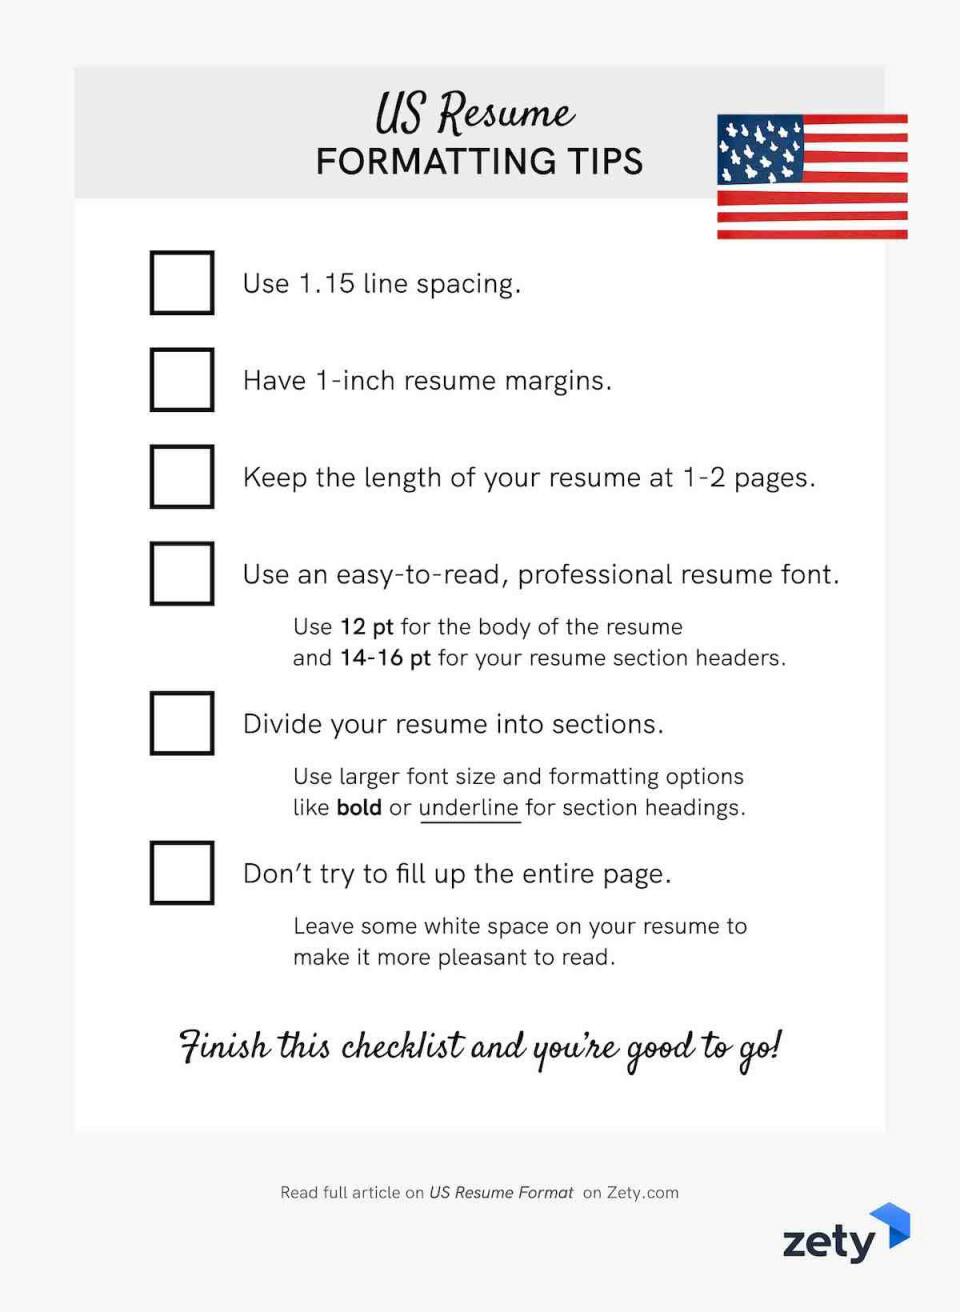 US Resume Formatting Tips